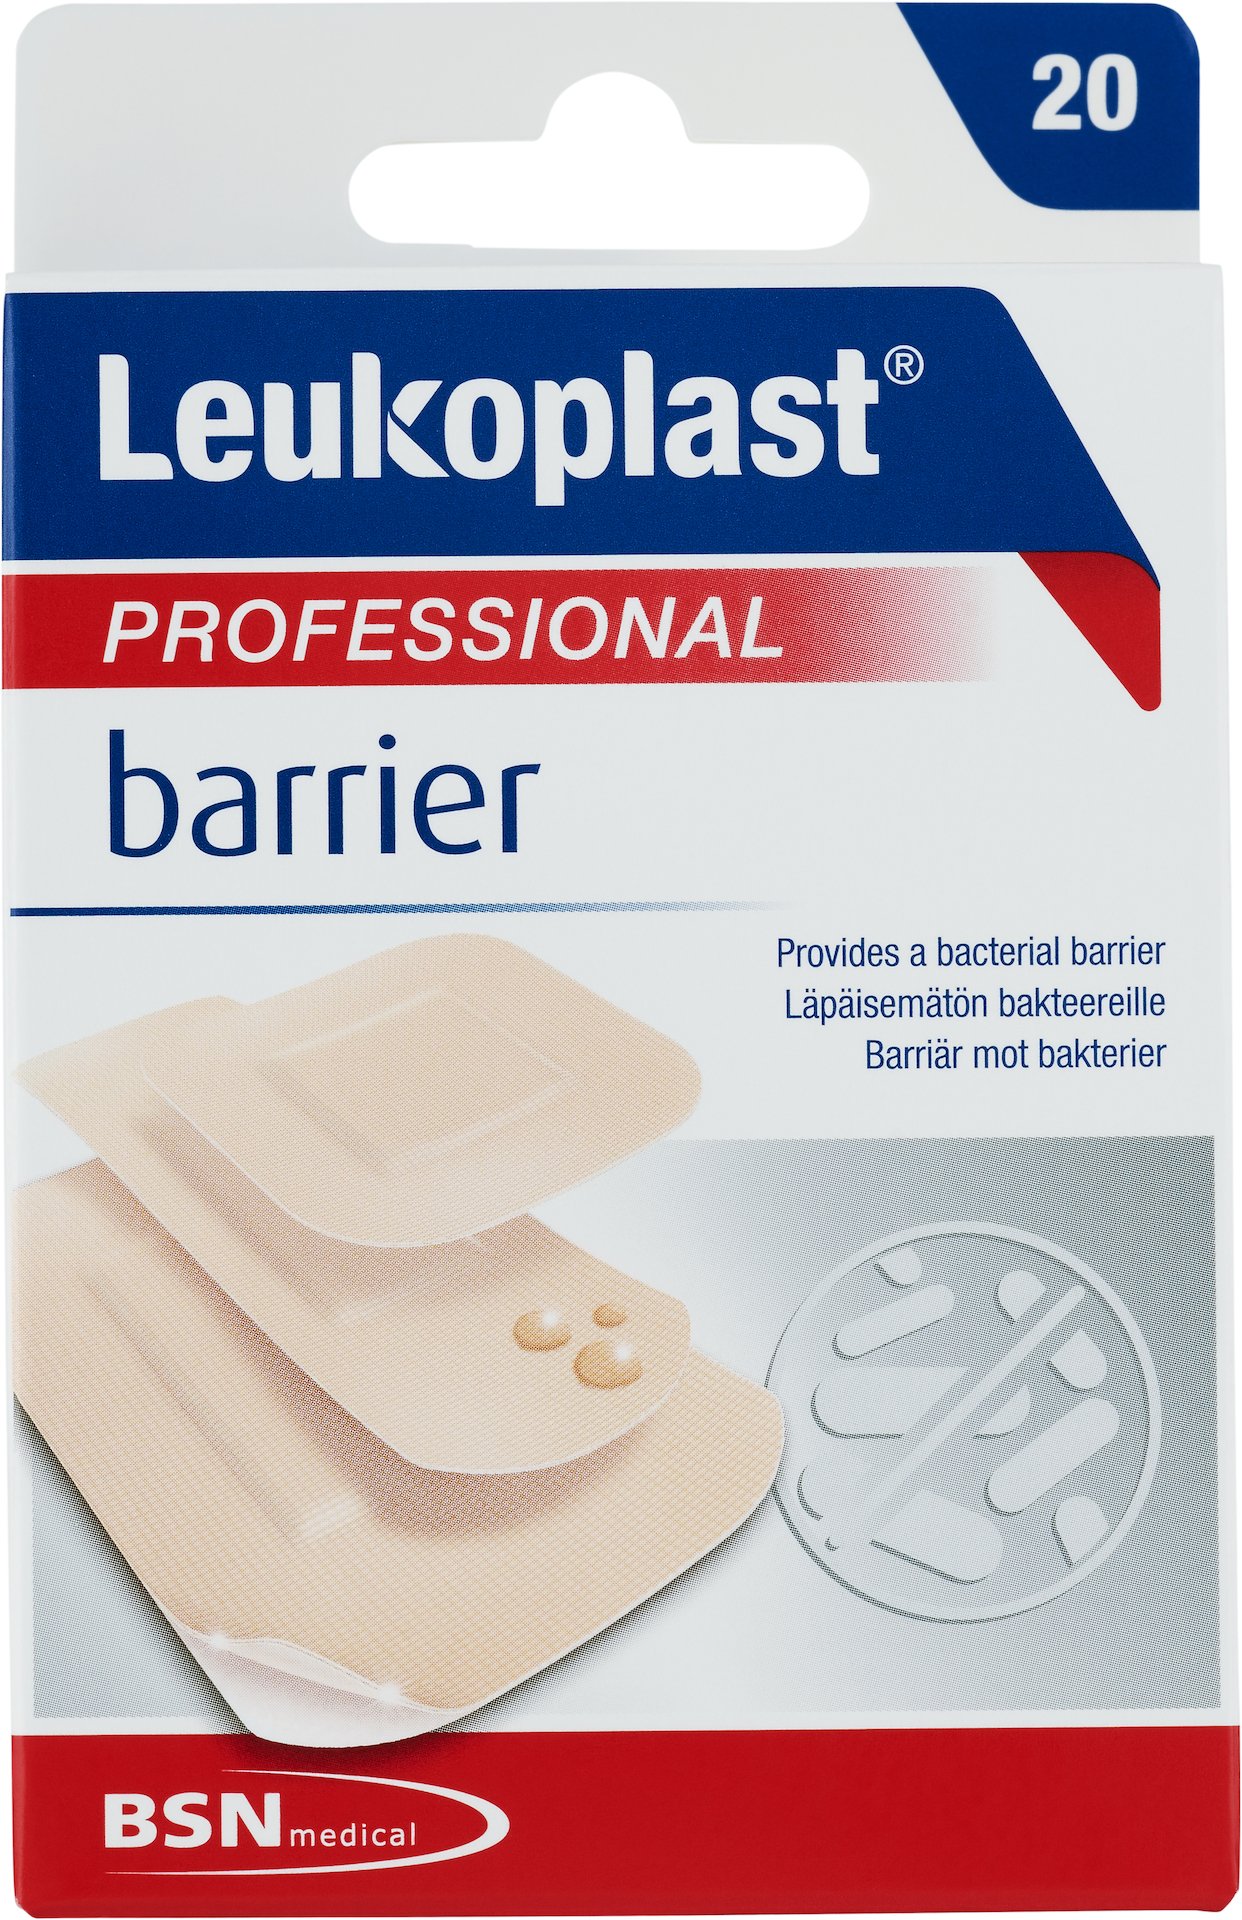 Leukoplast Professional Barrier 20 st